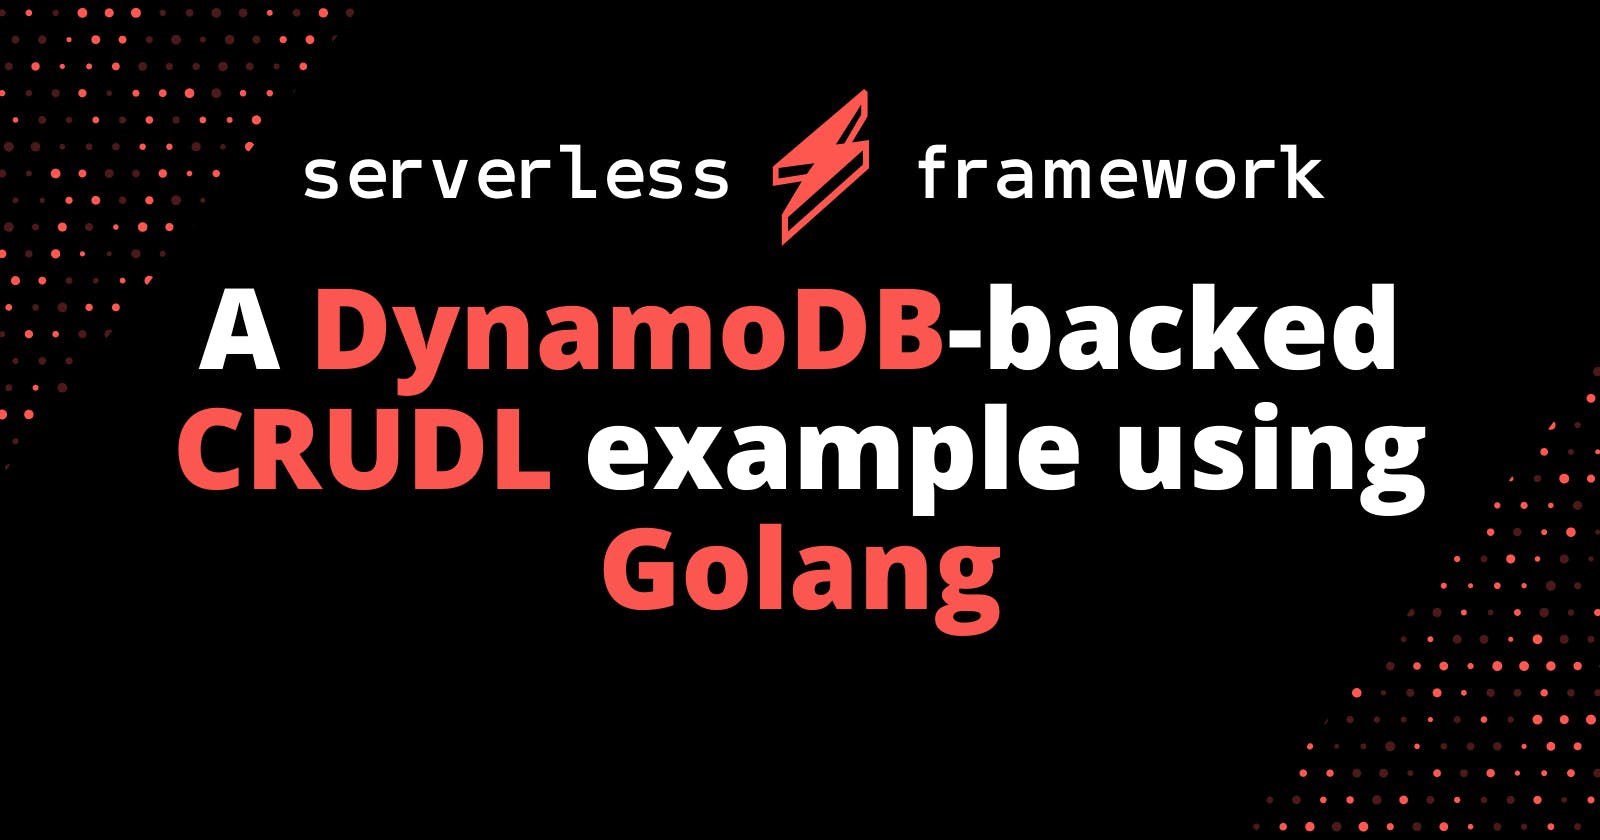 A DynamoDB-backed CRUDL example using Golang